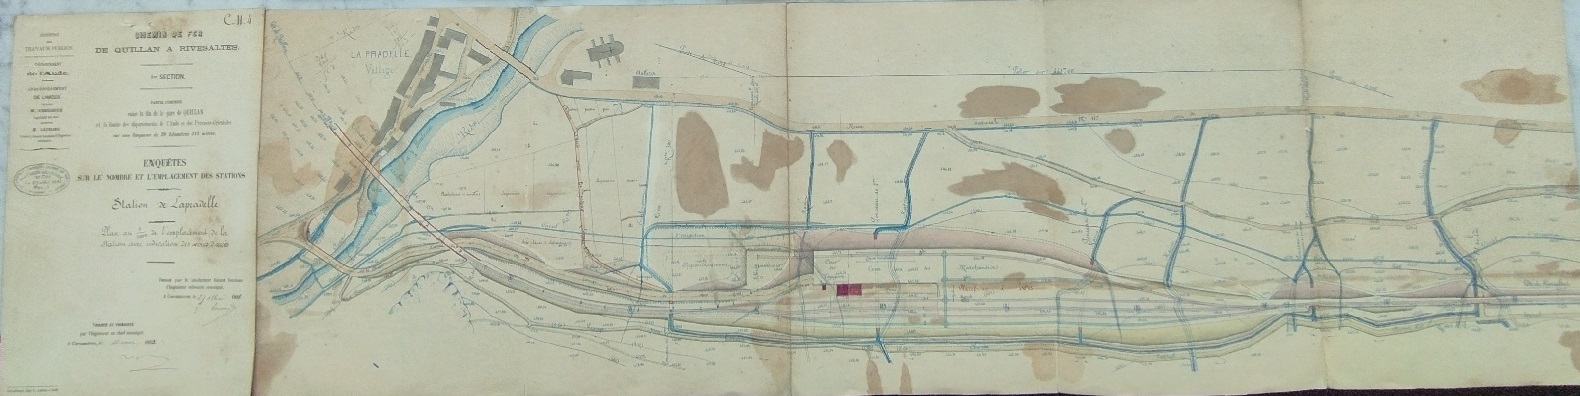 plan gare du 27 mai 1882 - général